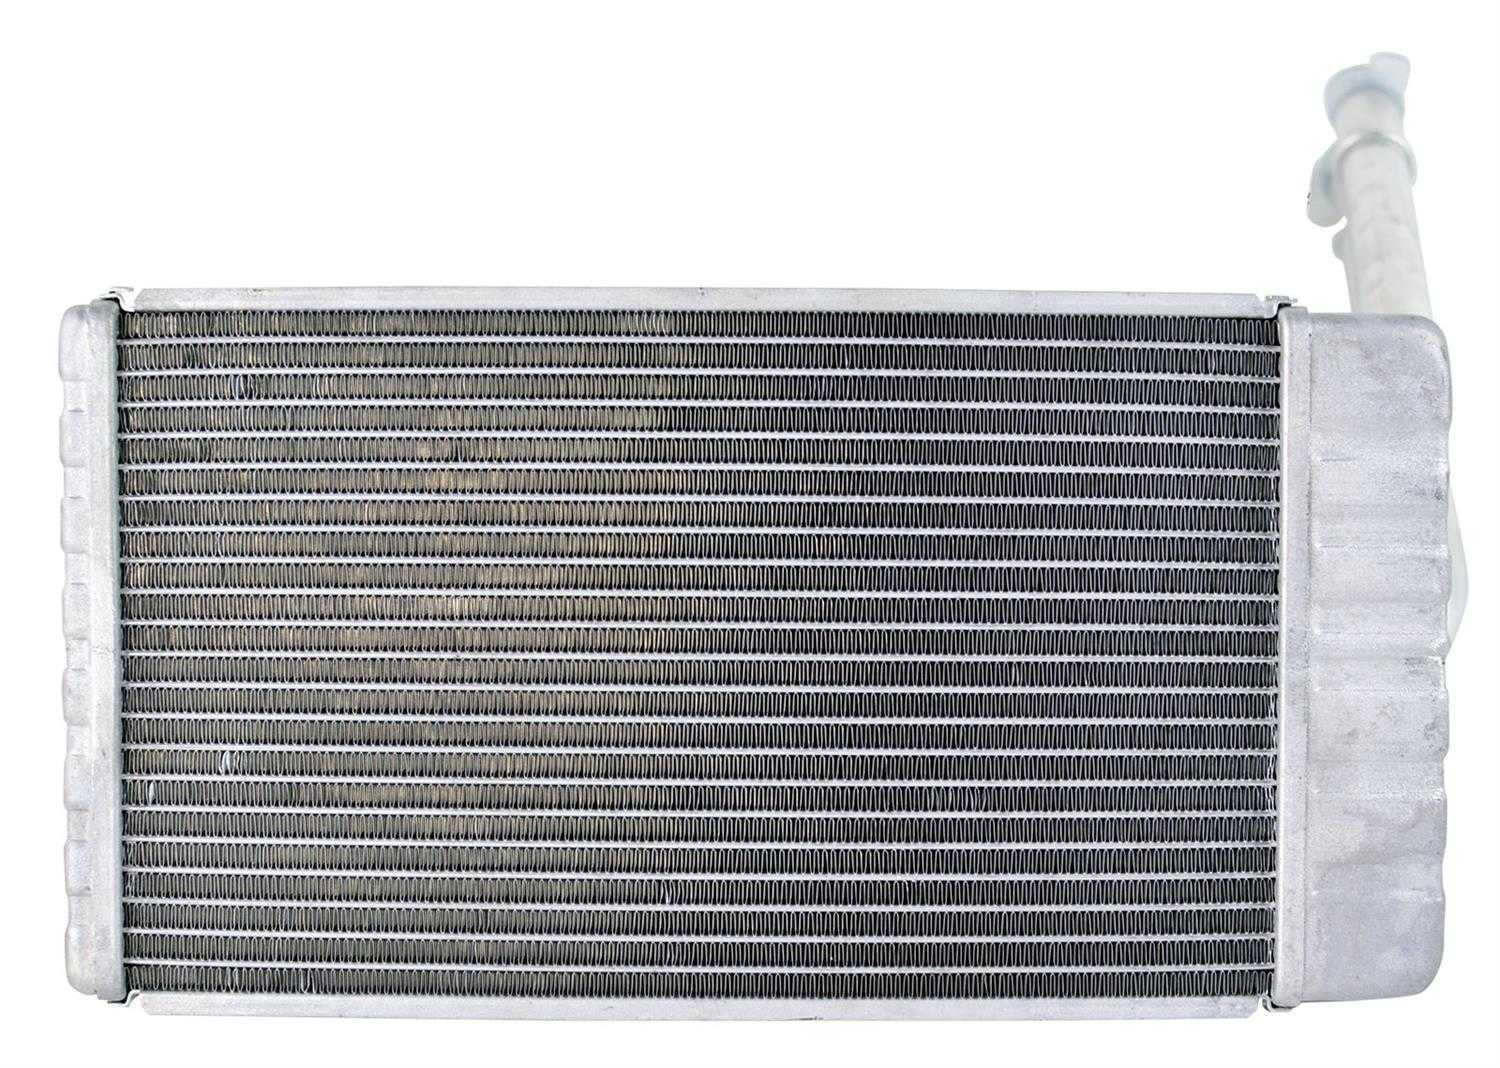 OSC Automotive Products 99141 Heater Core 